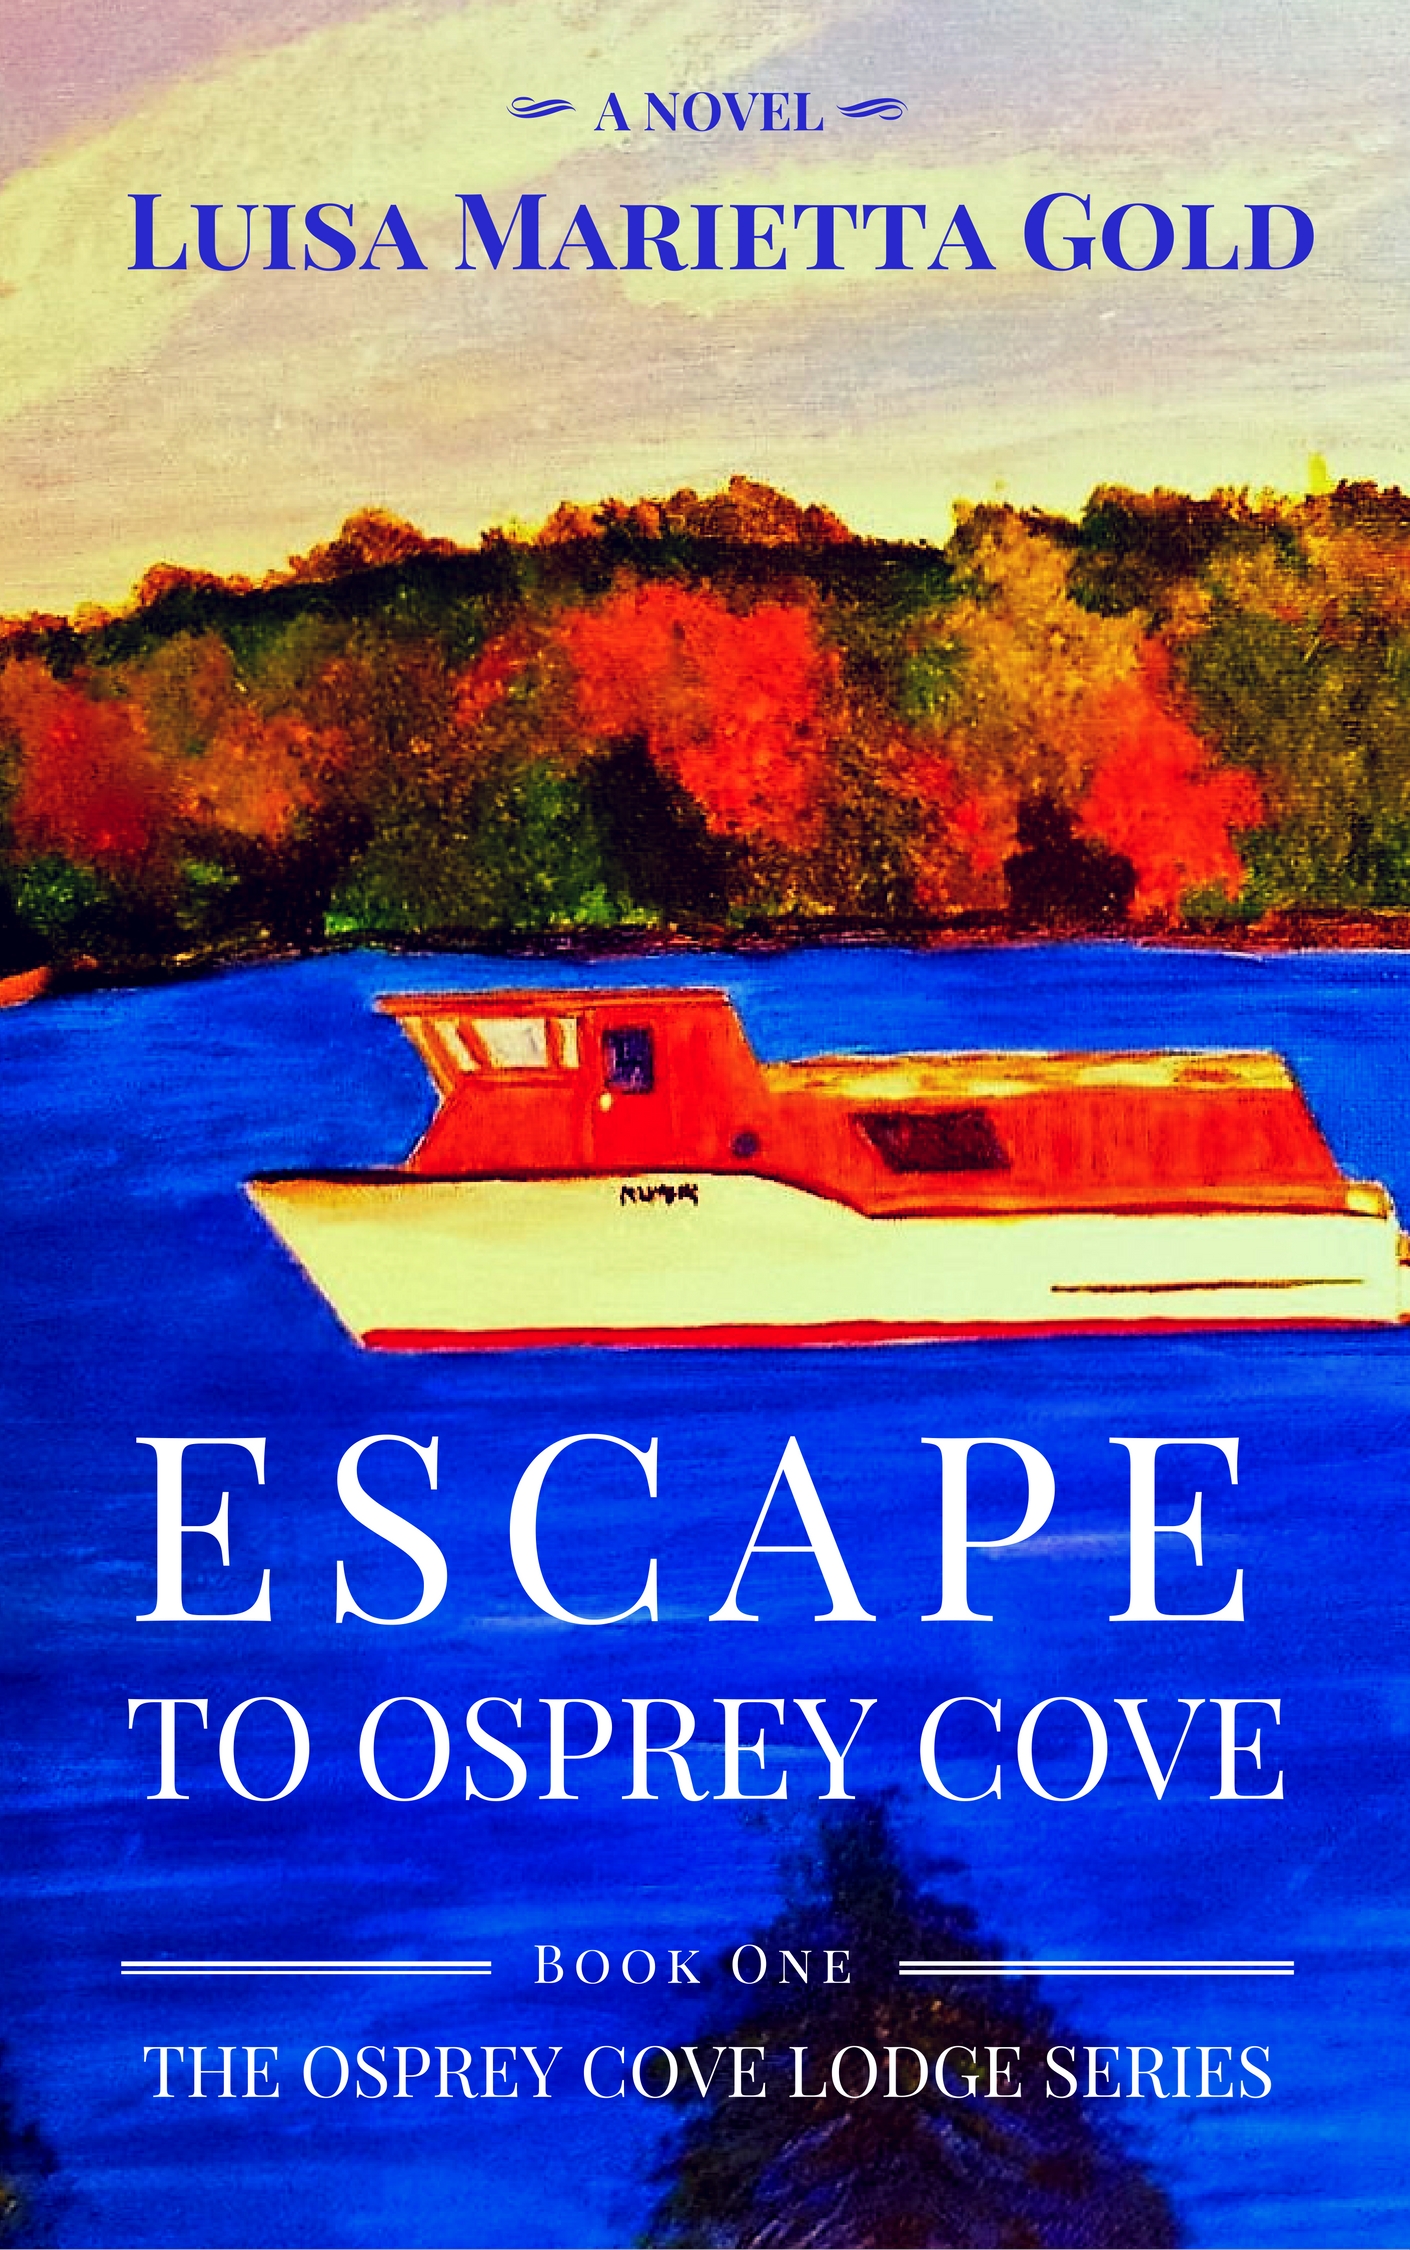 FREE: Escape to Ospsrey Cove by Luisa Marietta Gold